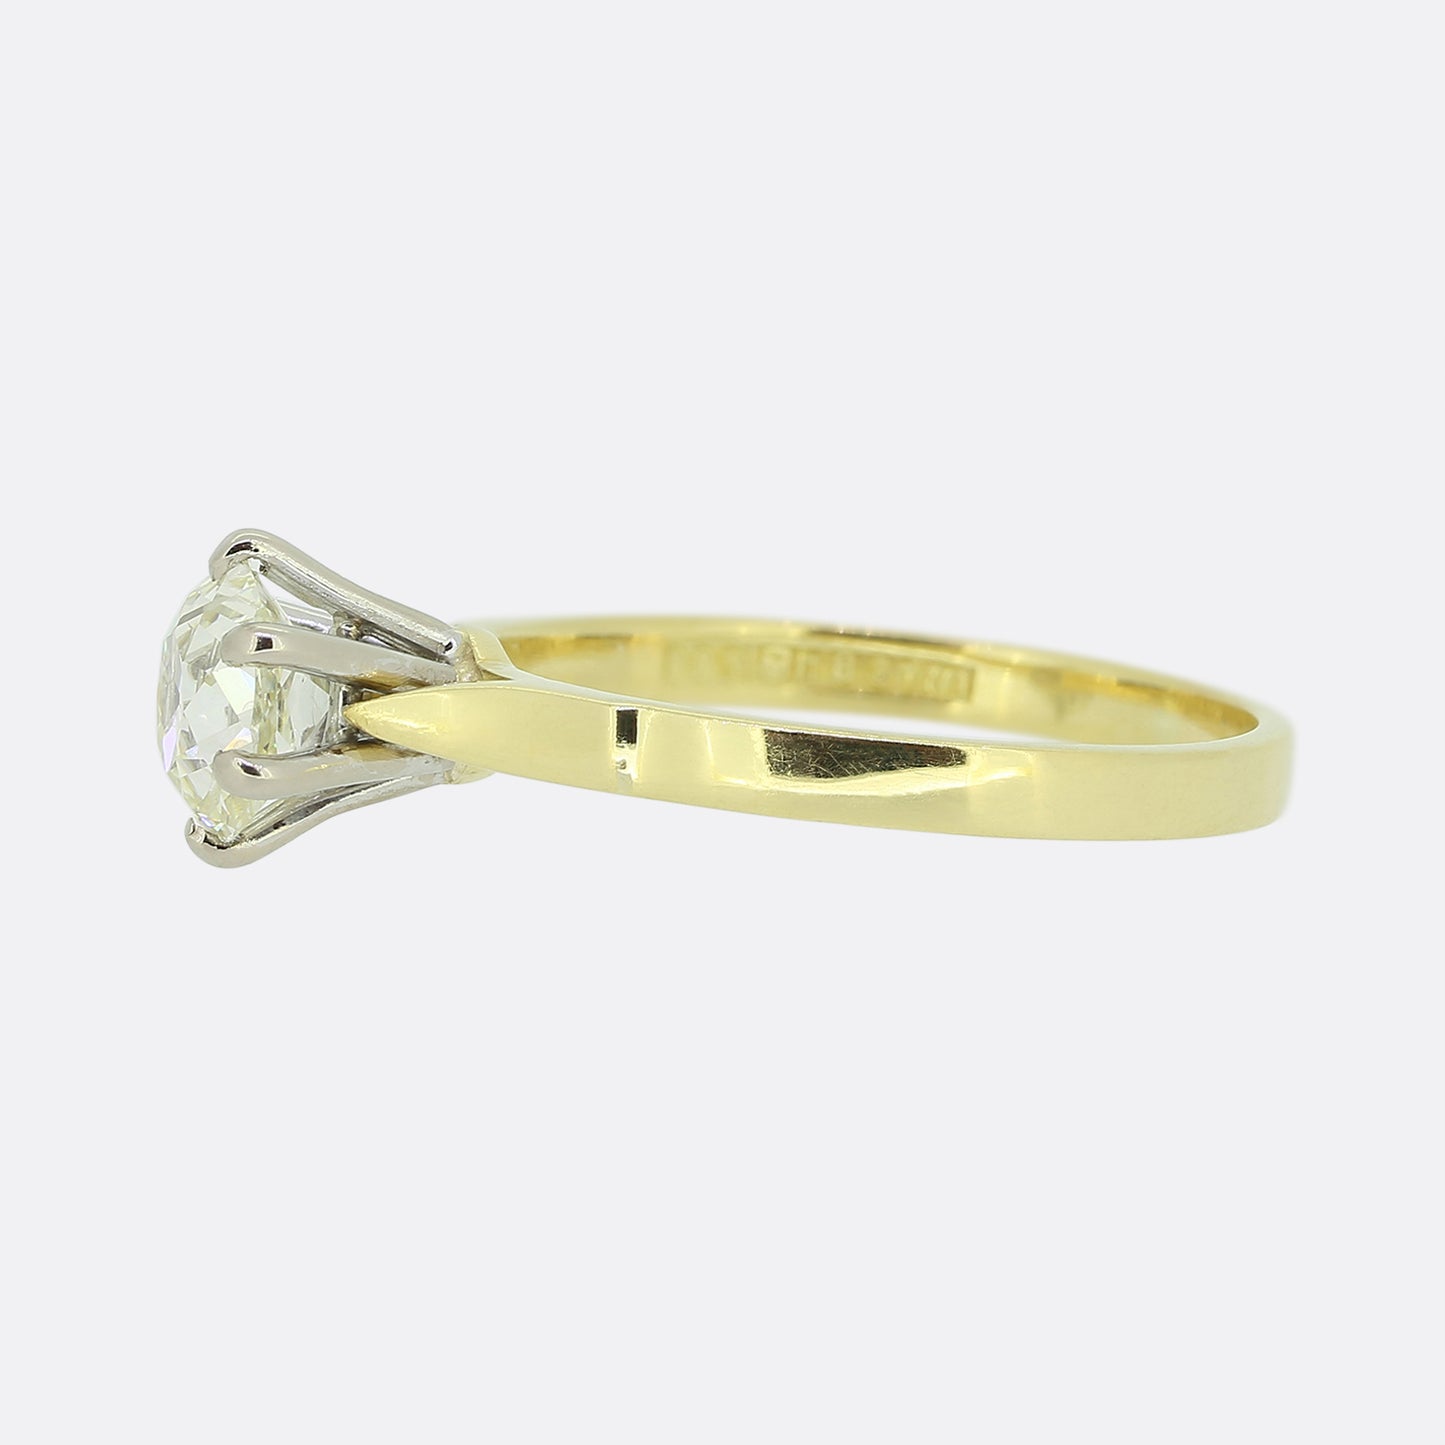 Vintage 1.30 Carat Old Cut Diamond Solitaire Engagement Ring